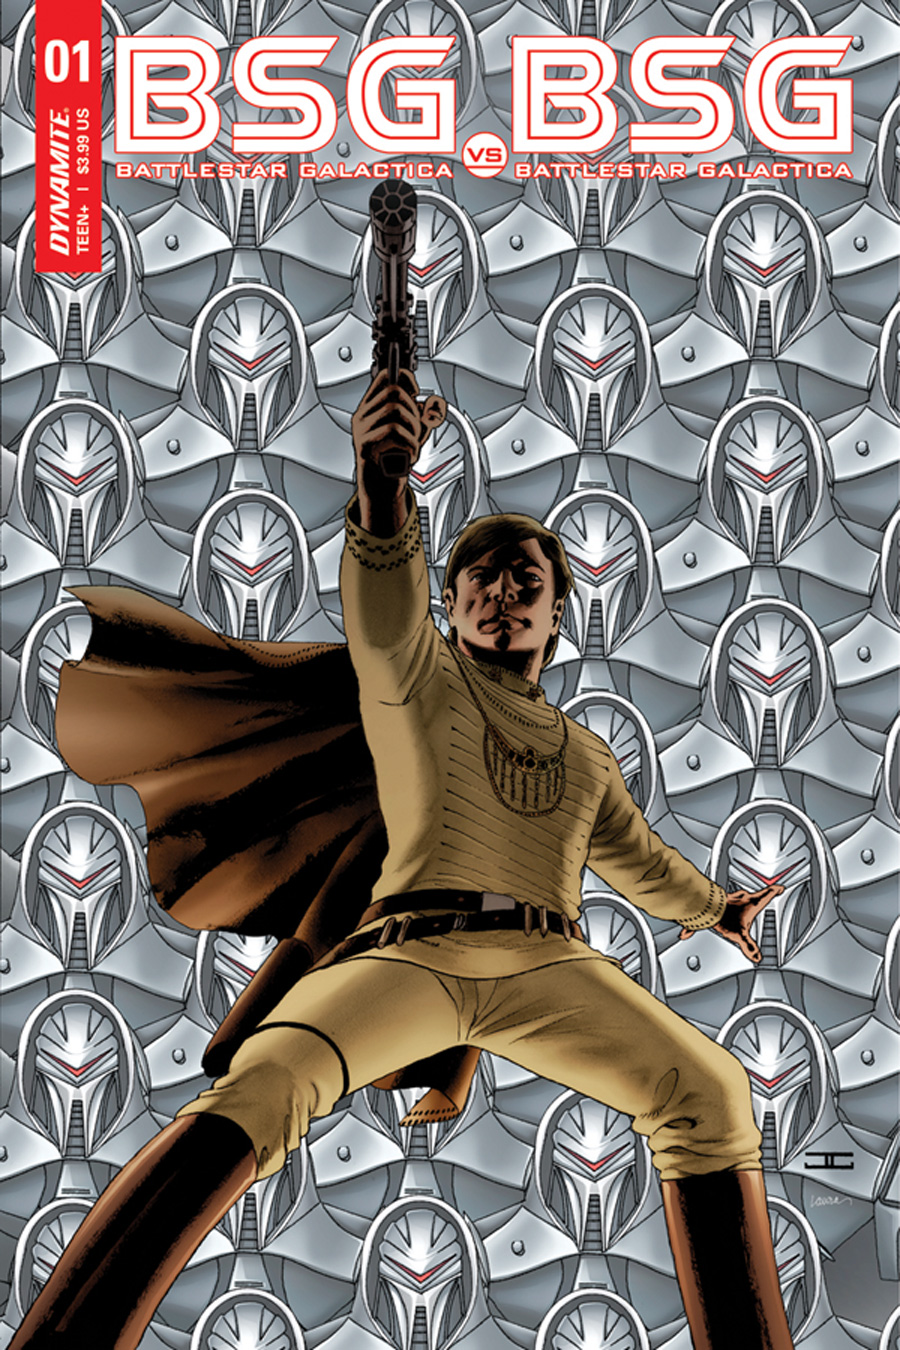 Battlestar Galactica #1 Variant Cover Dynamite Comics CB10050 